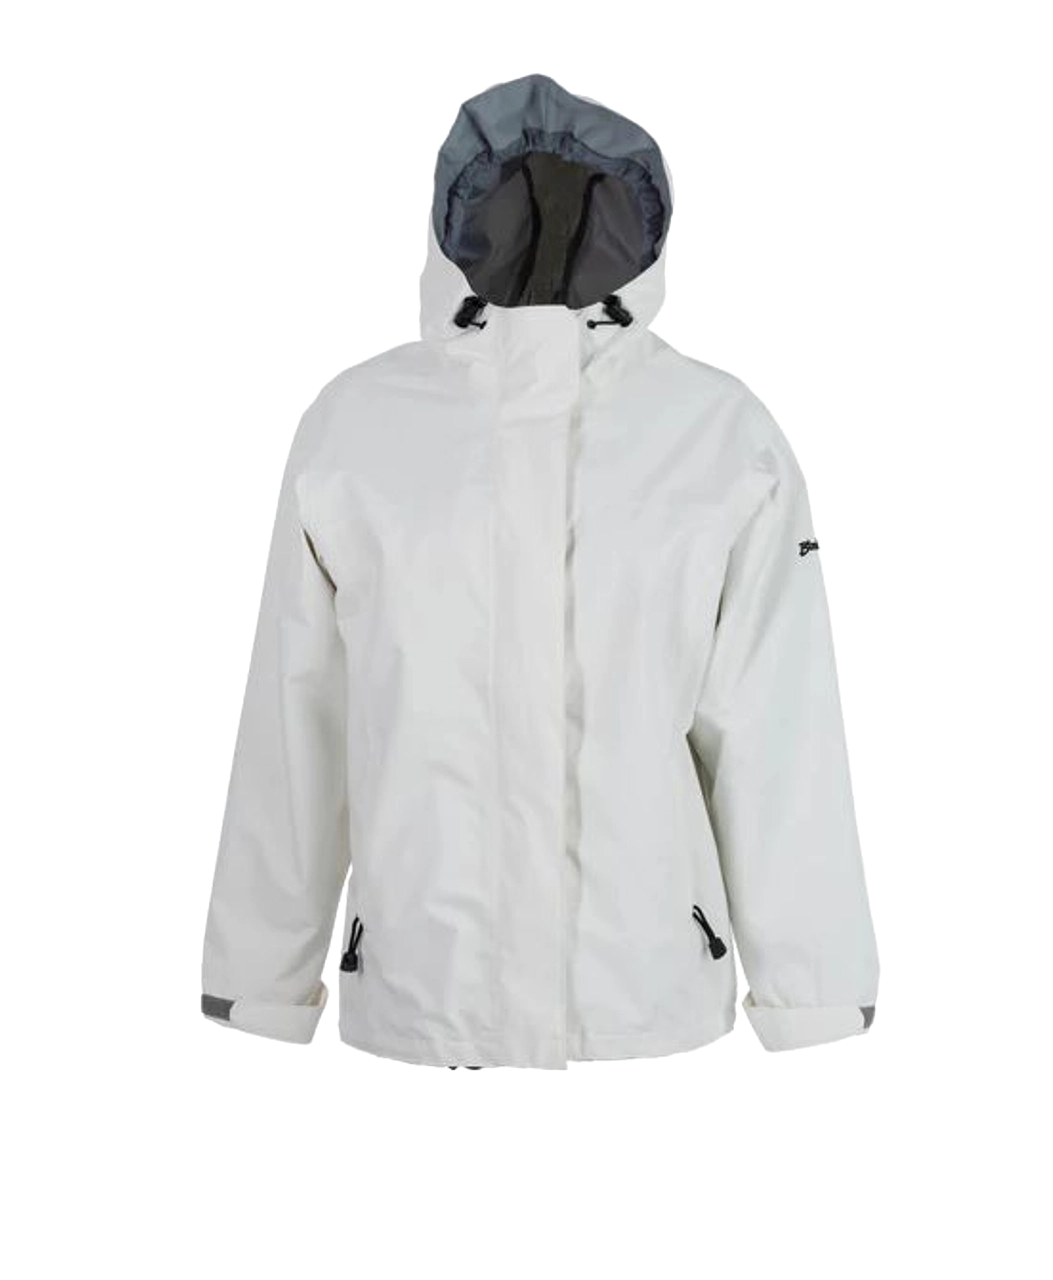 Bimini Bay Boca Grande Women's Waterproof Breathable Jacket